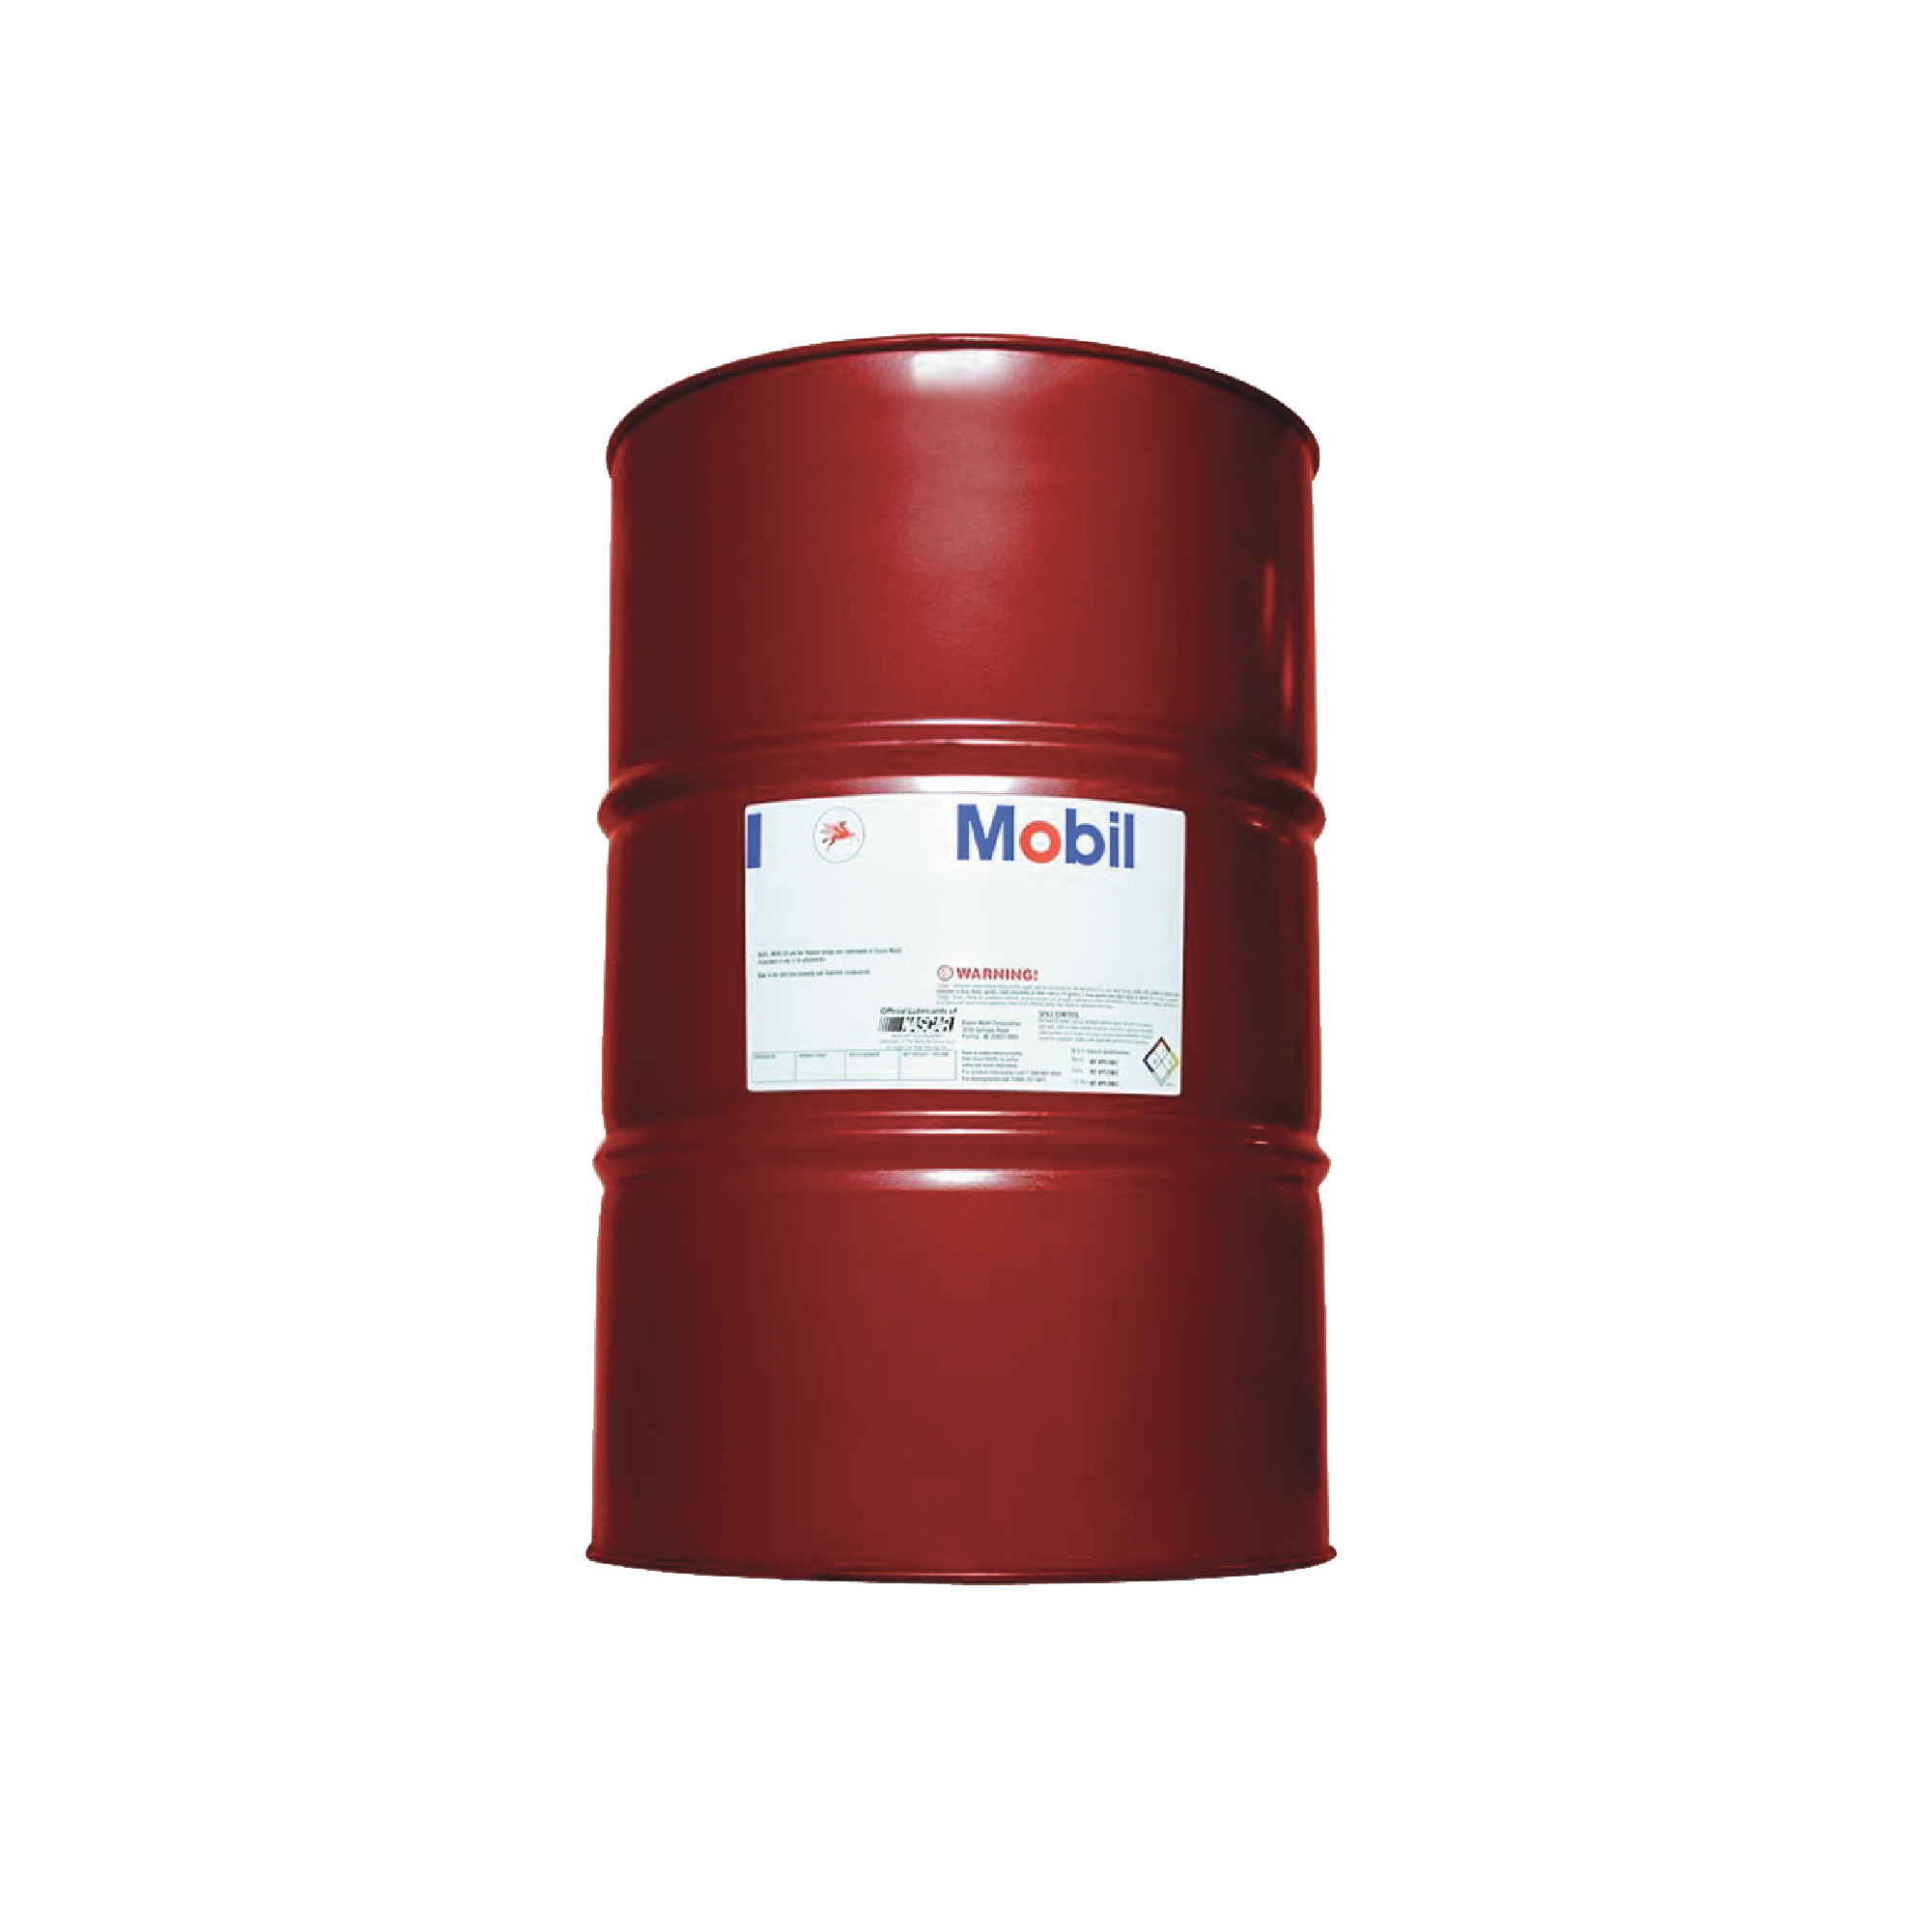 MOBIL DTE 10 EXCEL 68 55 Gallon Drum Hydraulic Fluid